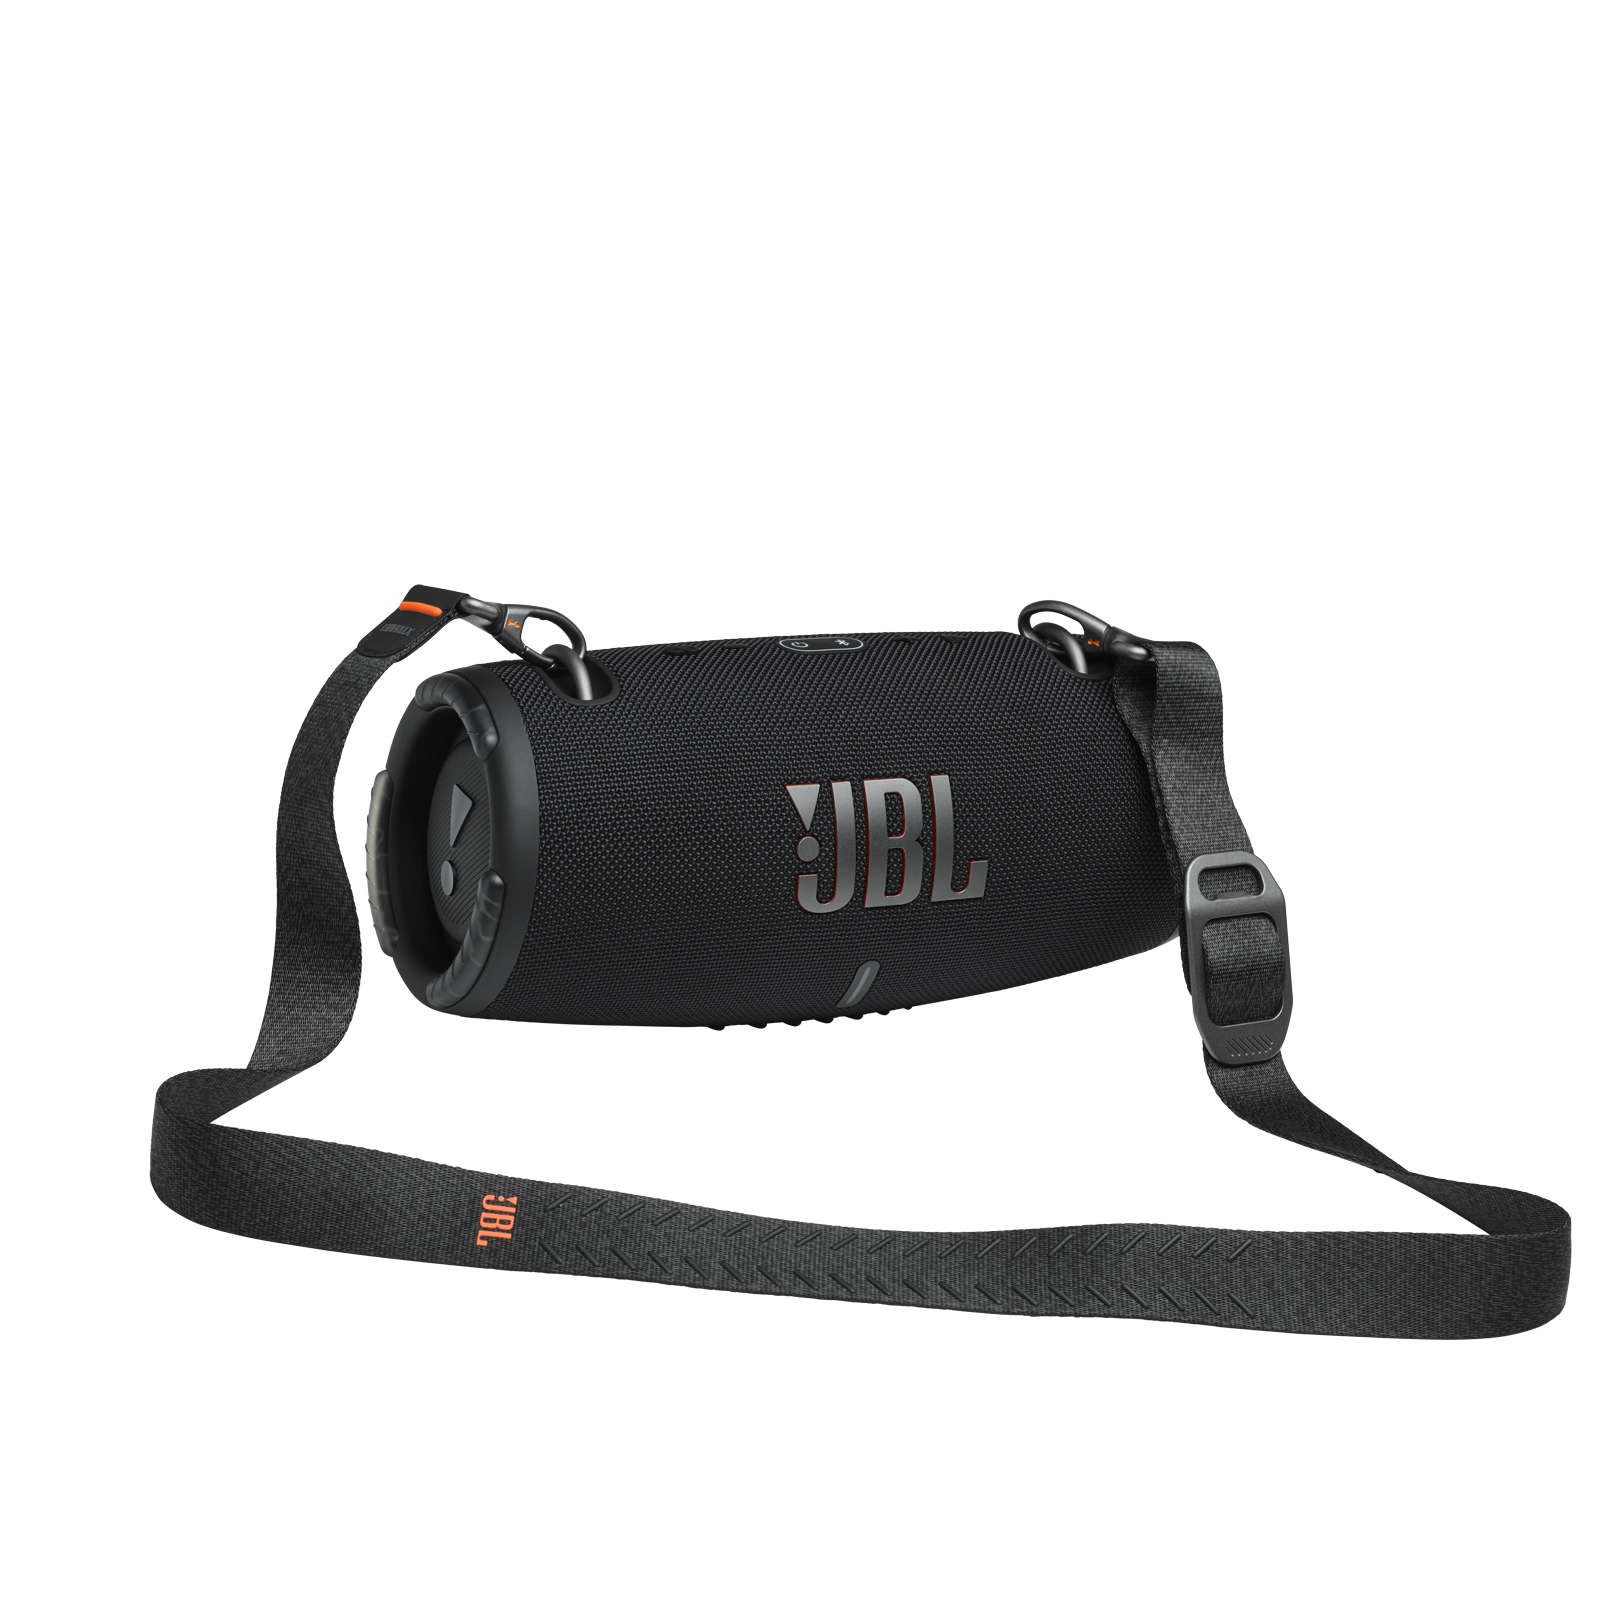 JBL Xtreme 3 - Black - Portable waterproof speaker - Detailshot 1